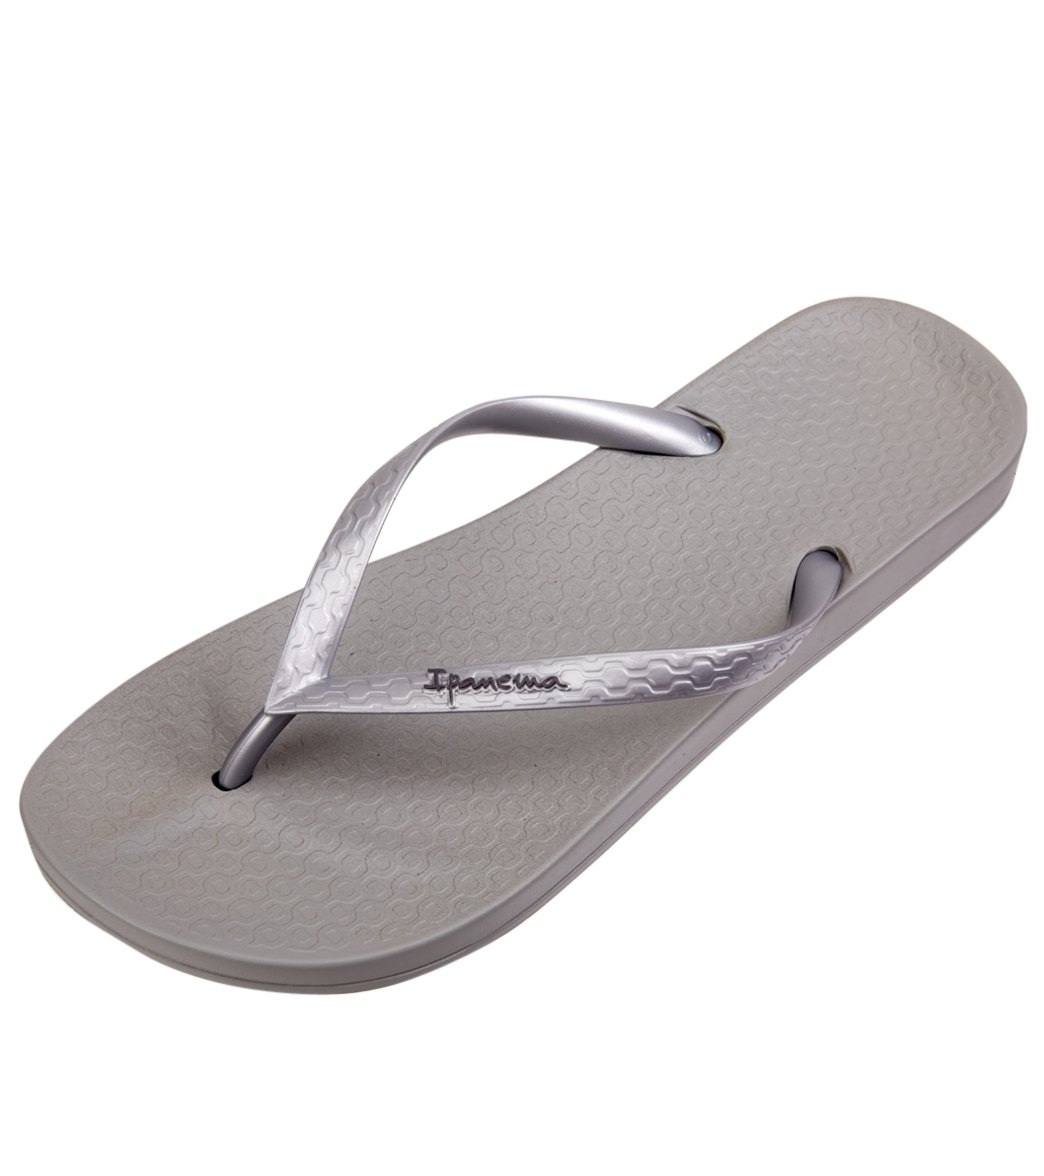 Ipanema Women's Ana Tan Flip Flop - Grey/Silver 11 Plastic - Swimoutlet.com